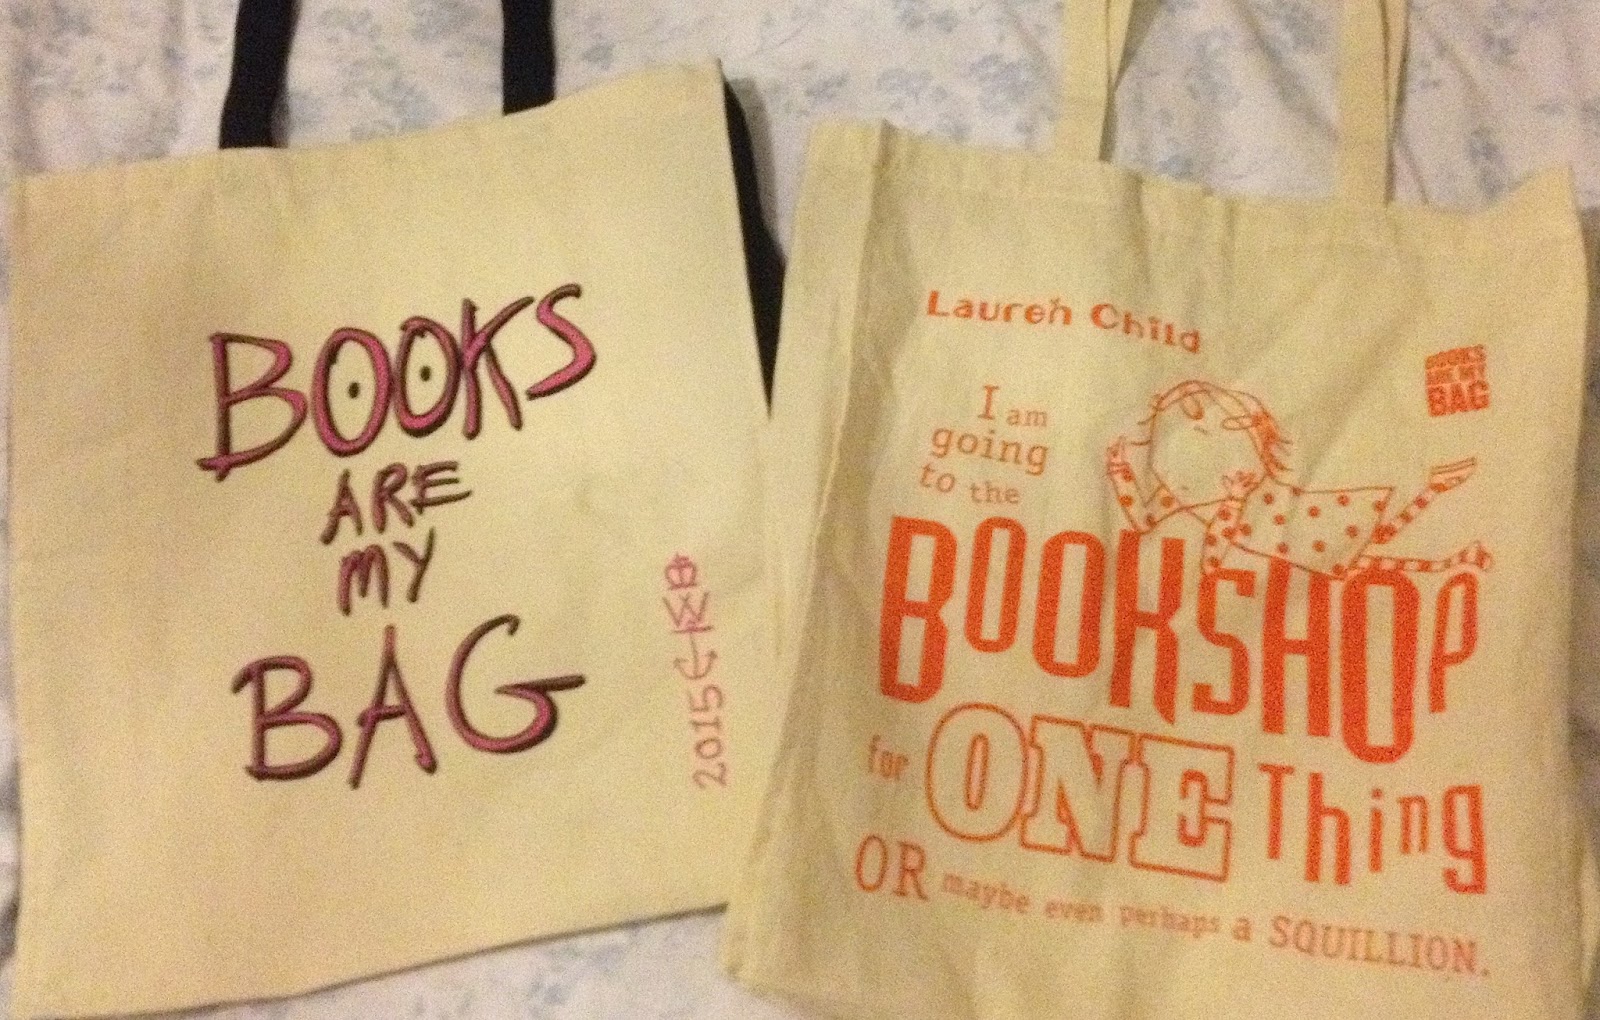 The bookshop around the corner: Bookshops will always be my bag